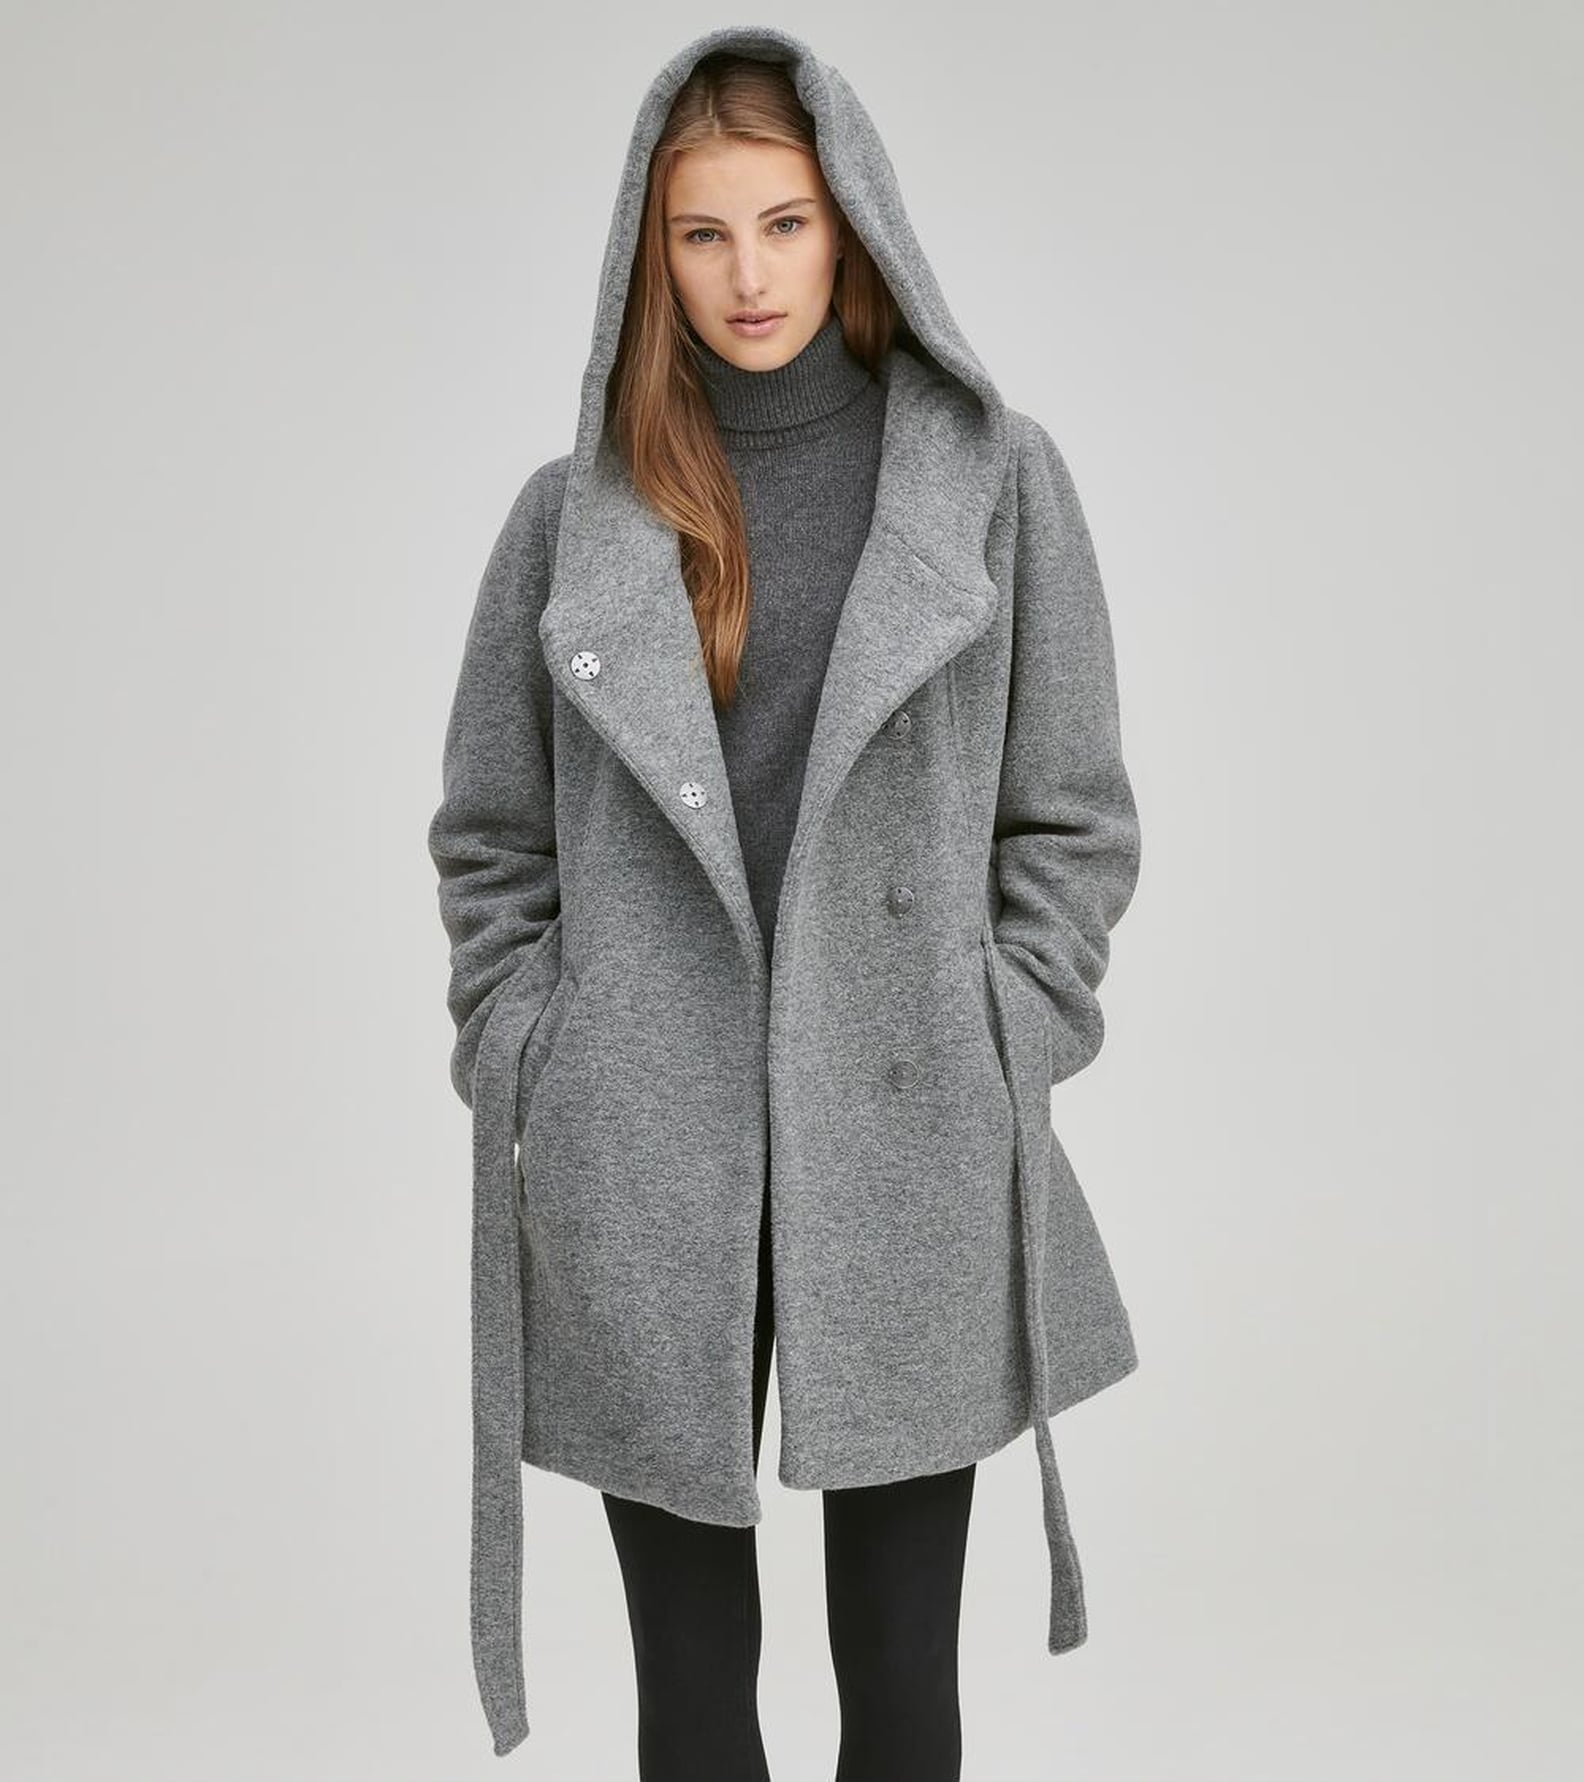 Meghan Markle's Gray Coat 2018 | POPSUGAR Fashion